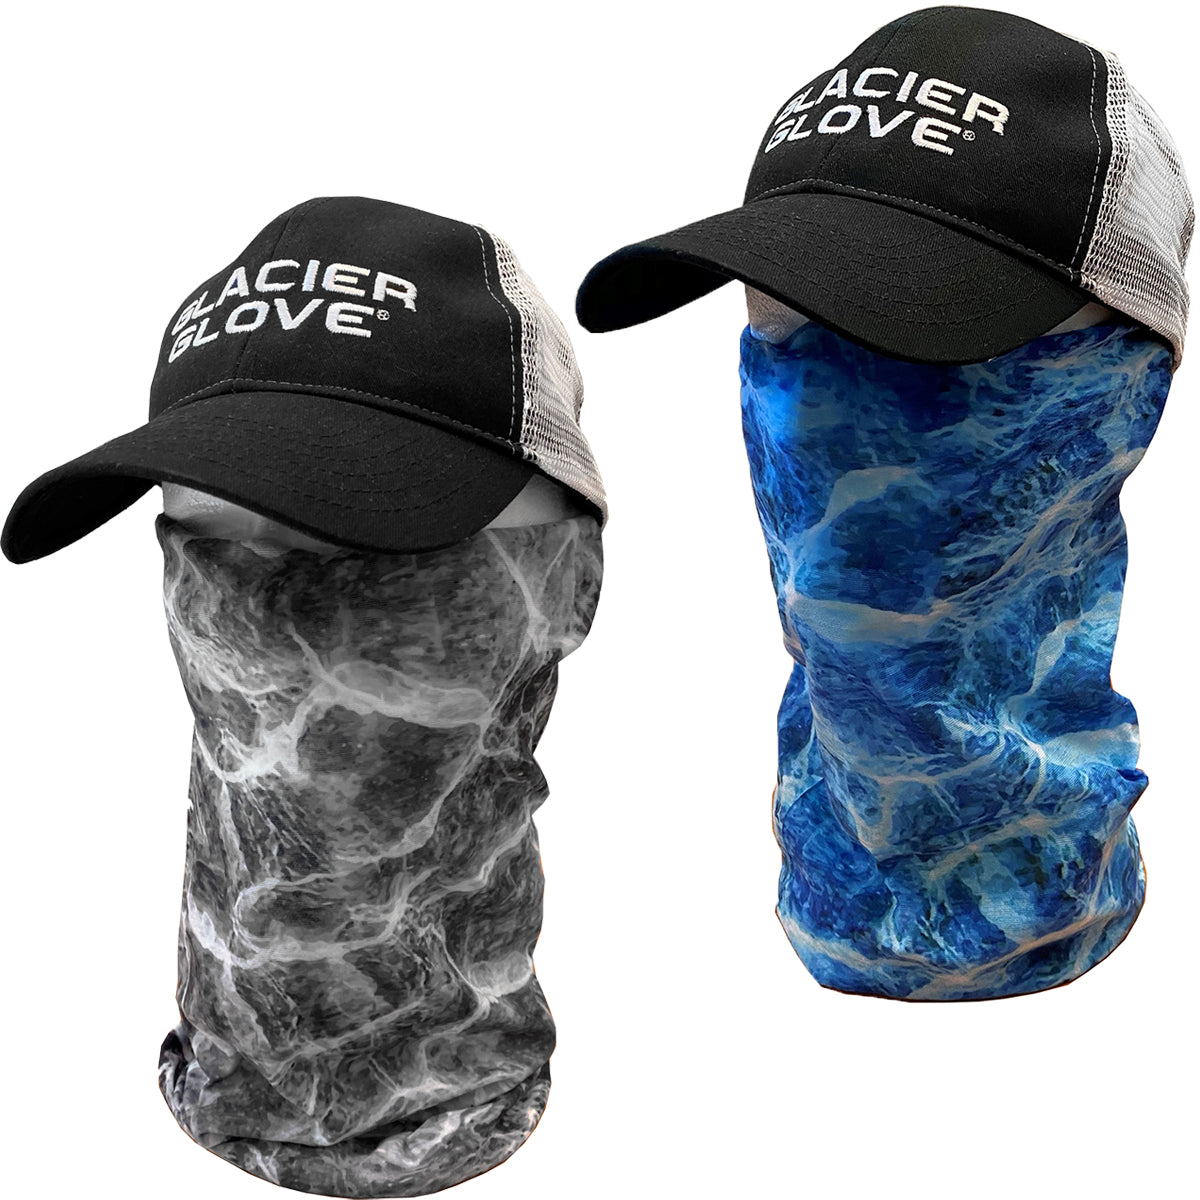 Glacier Glove Neck Tube Fishing Gaiter Glacier Glove